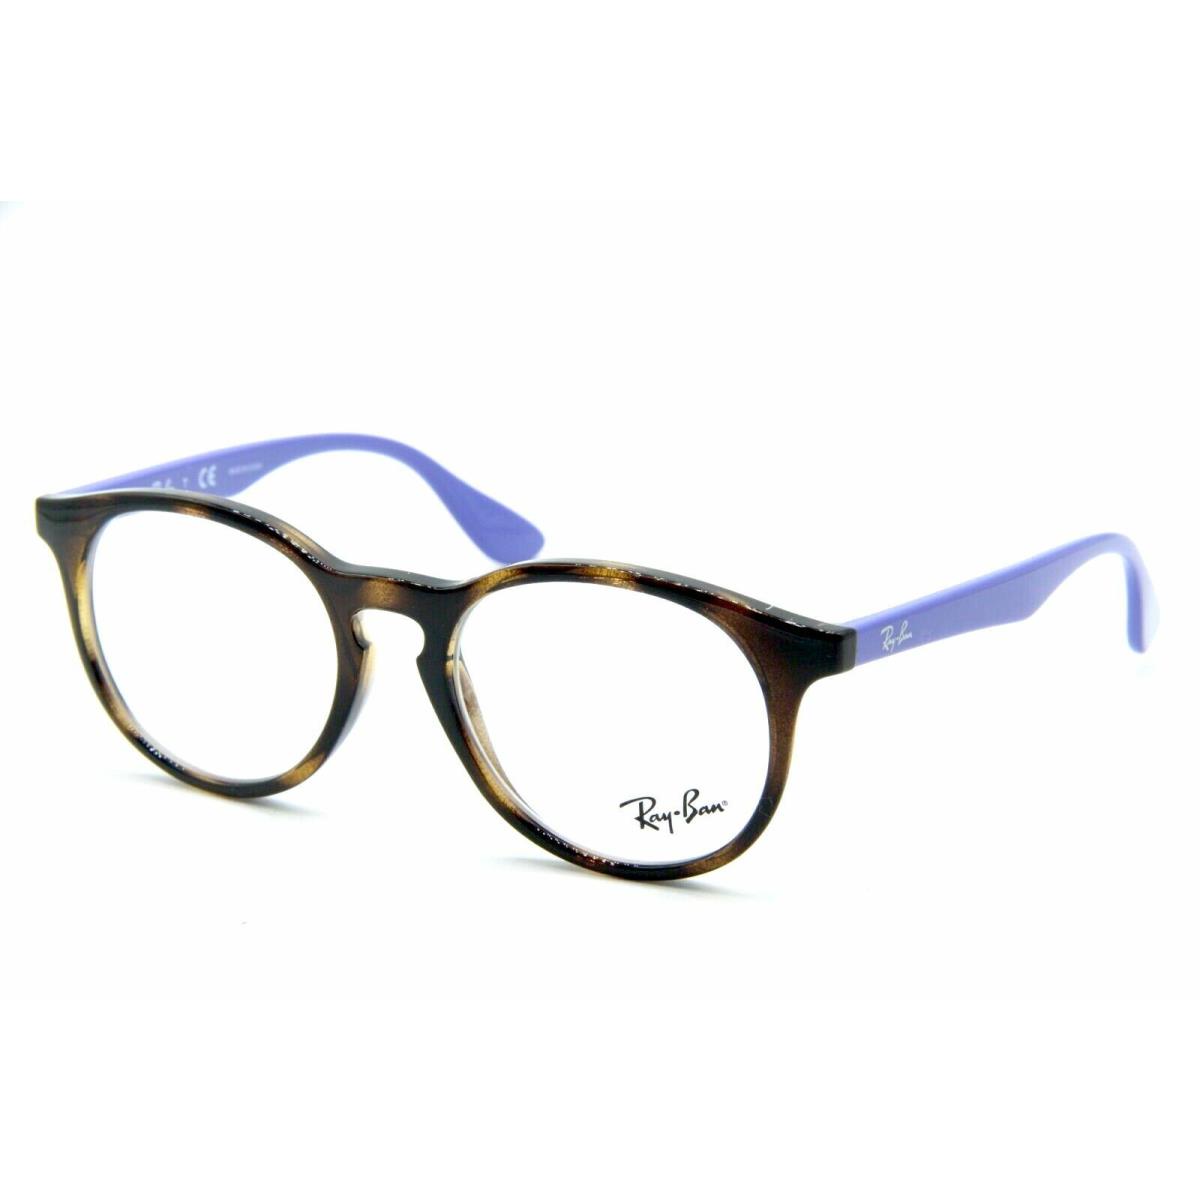 Ray-ban Ray Ban RB 1554 3727 Tortoise Blue Eyeglasses RX 48-16-130